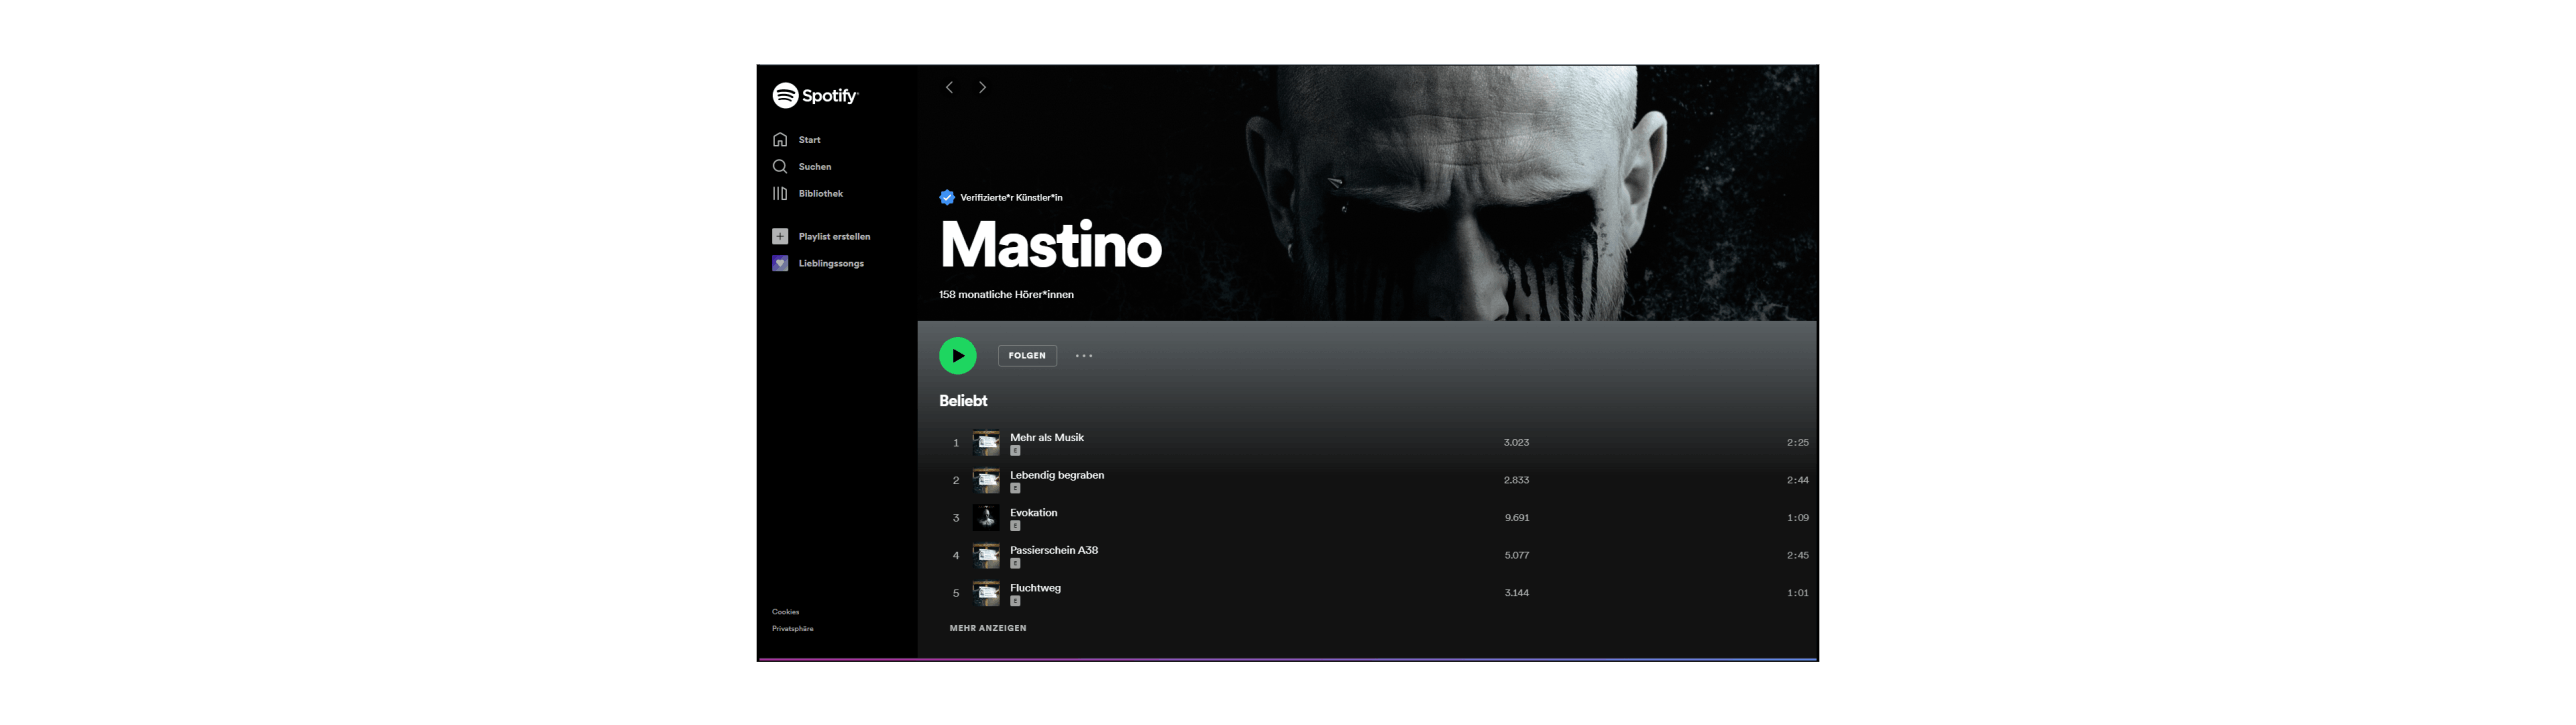 Mastino Spotify